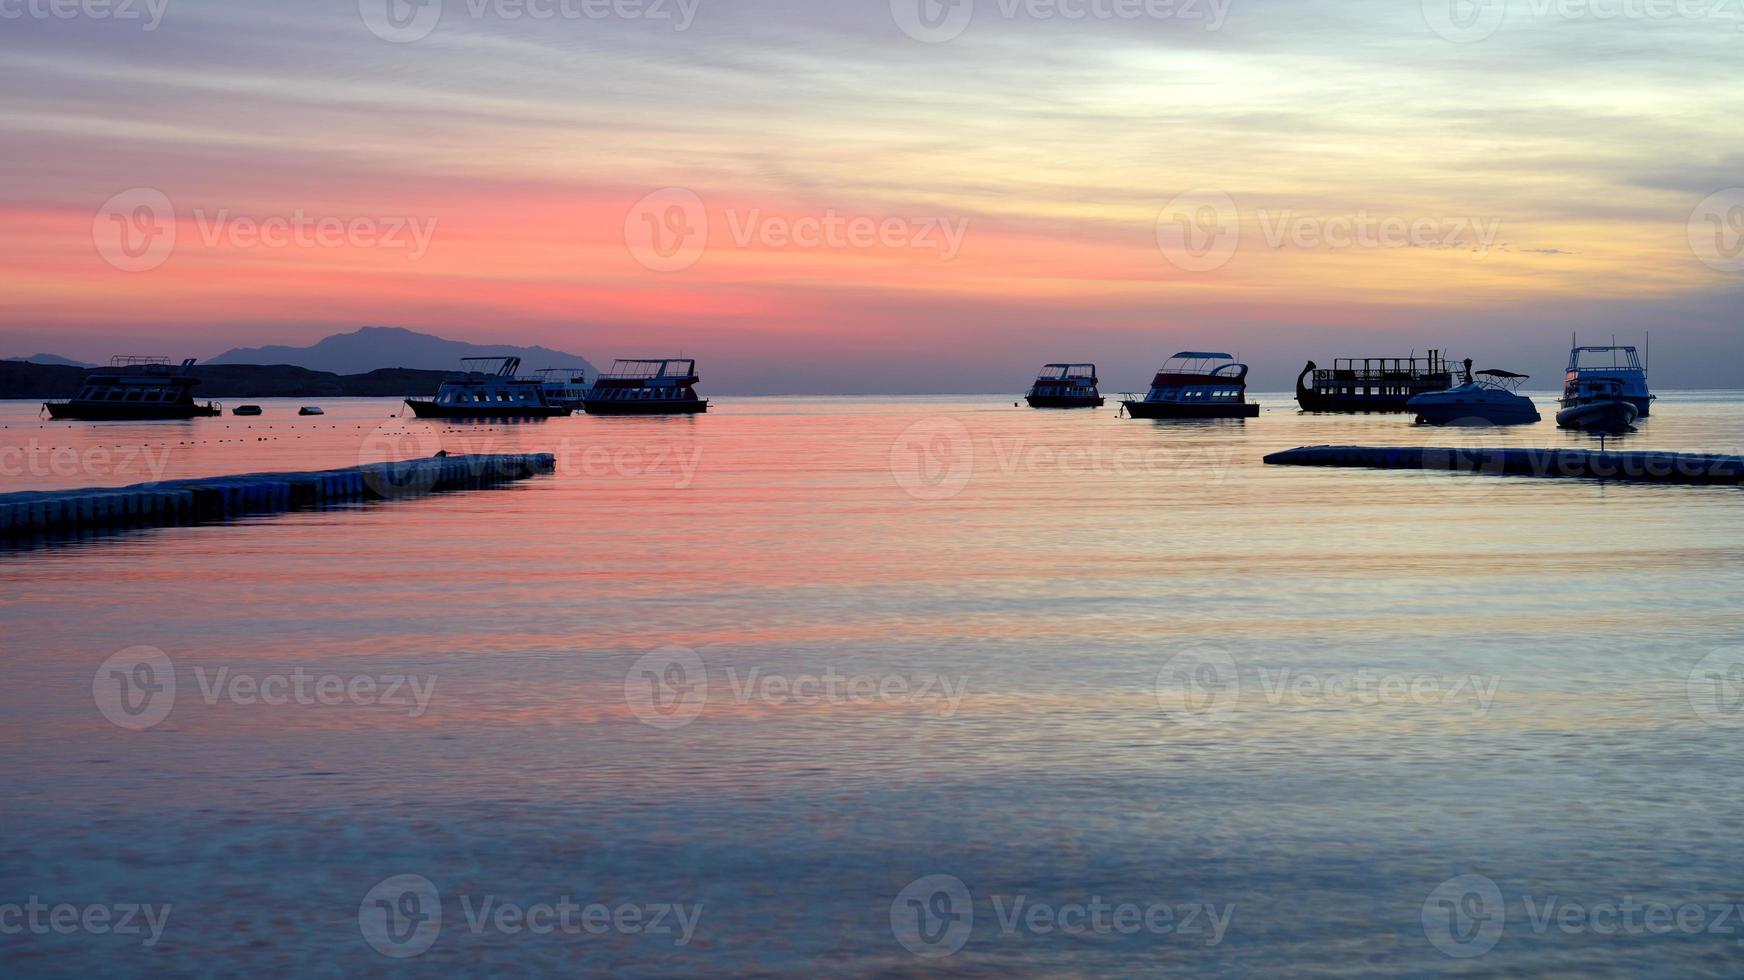 Sunrise at Naama Bay, Red Sea and motor yachts photo